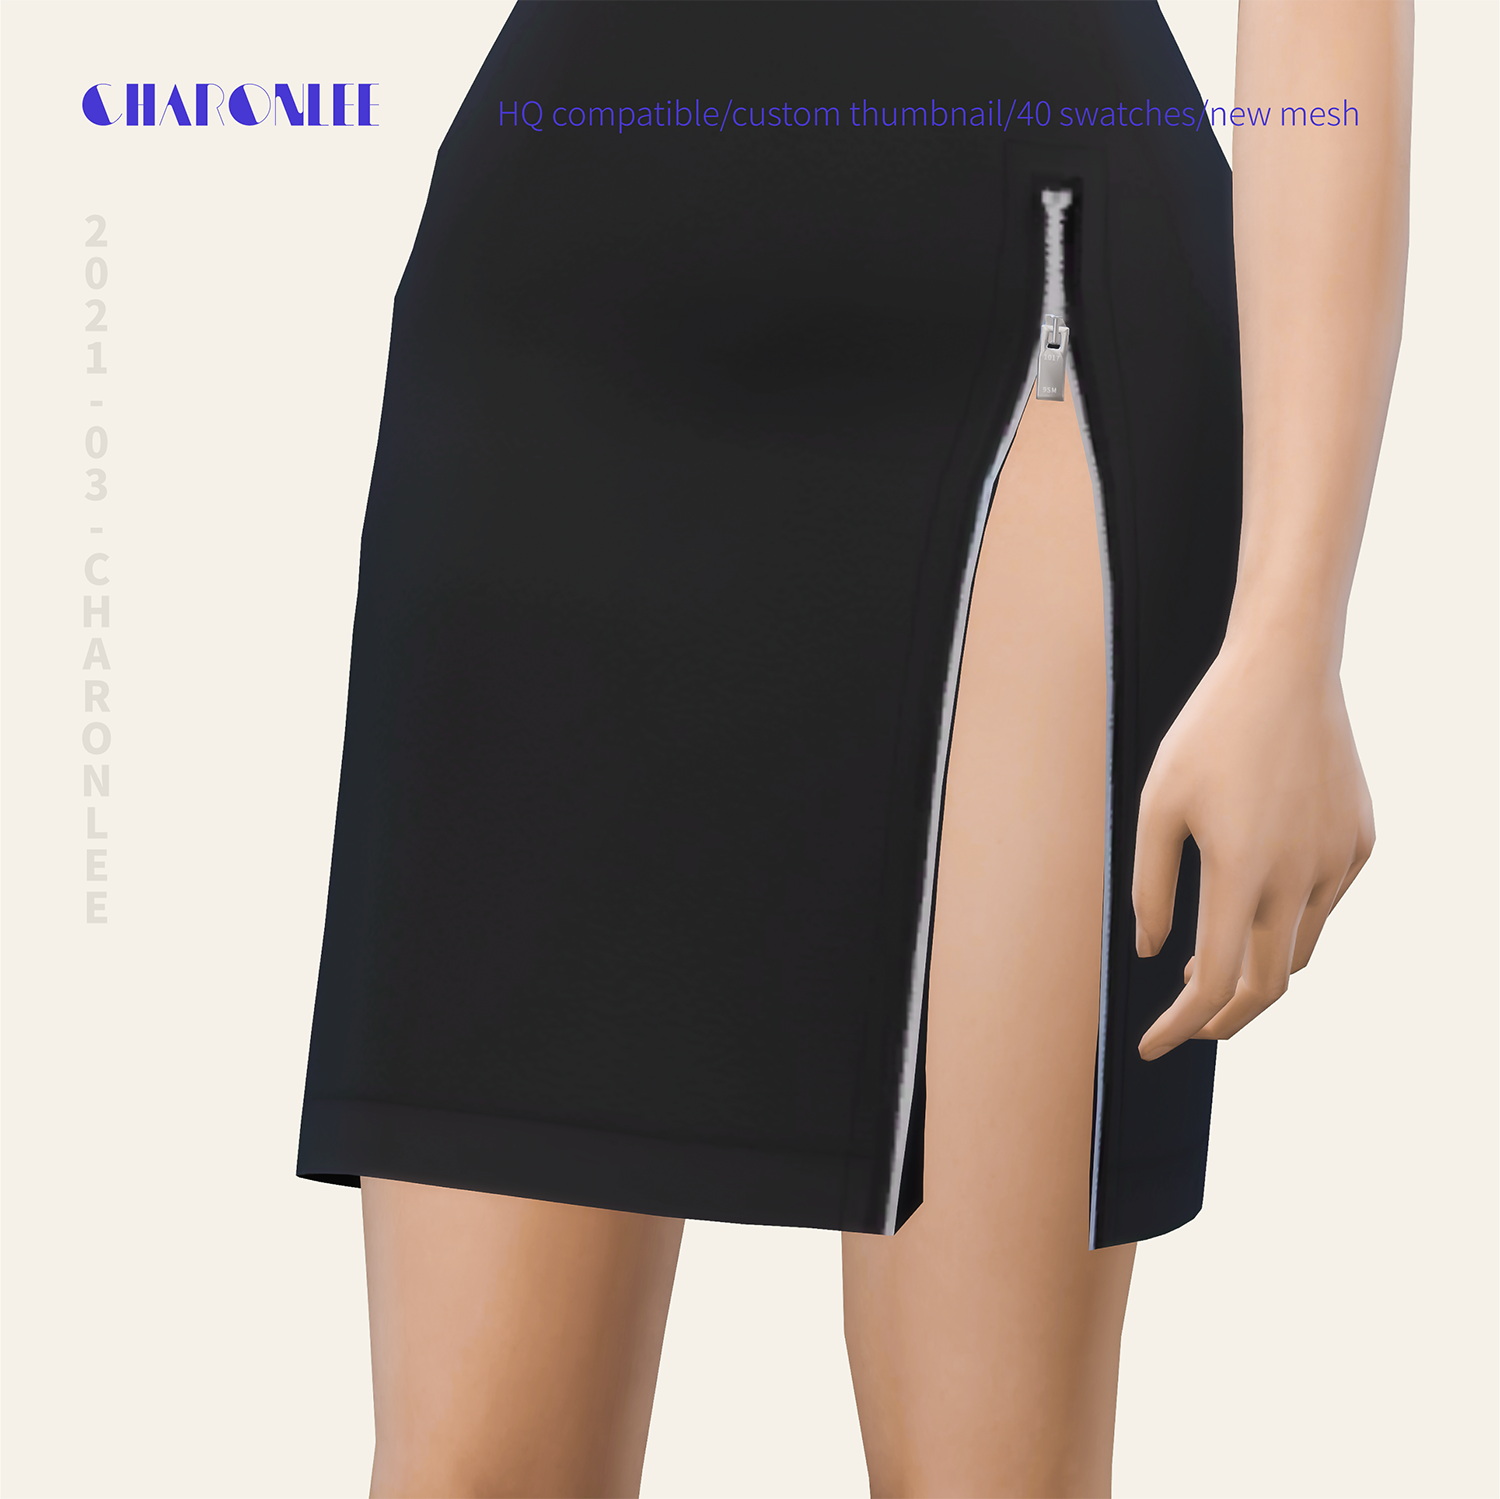 Zipped Mini Dress at Charonlee » Sims 4 Updates